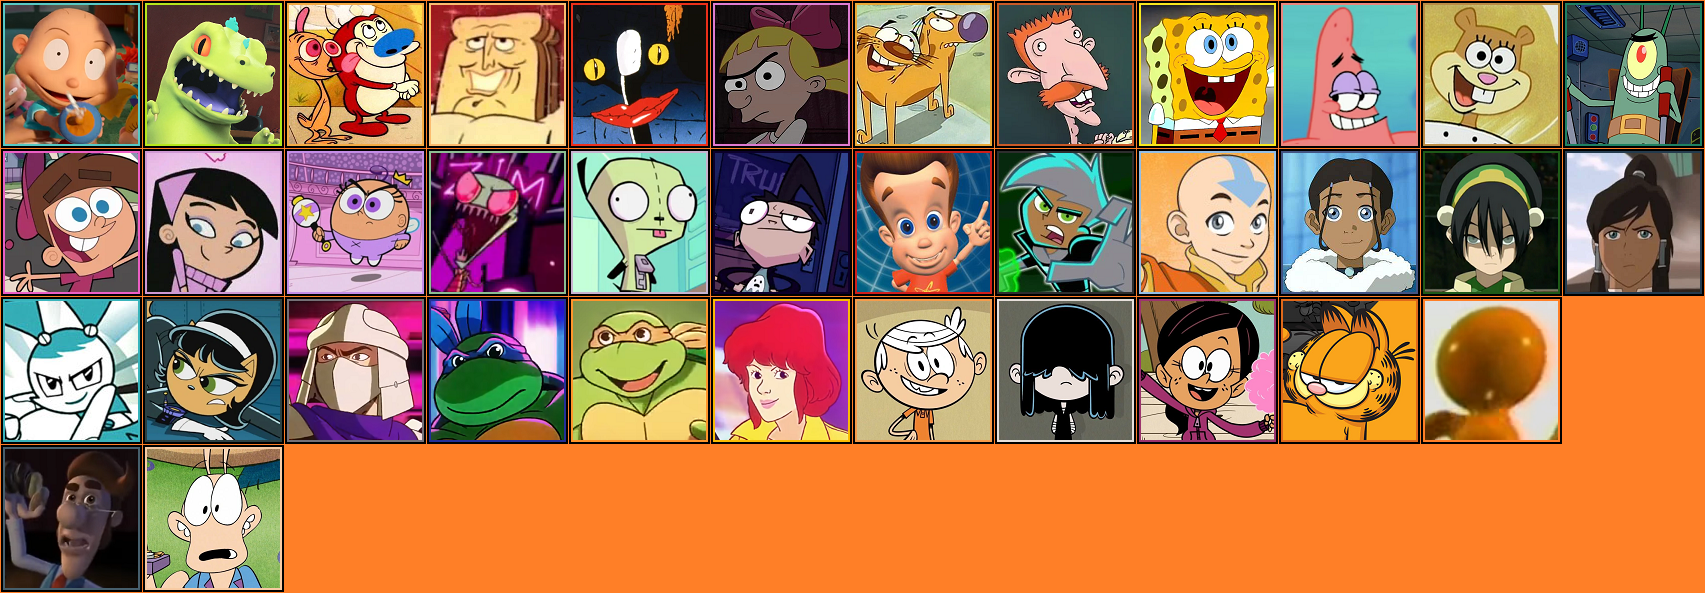 Nickelodeon All-Star Brawl 2 - Wikipedia